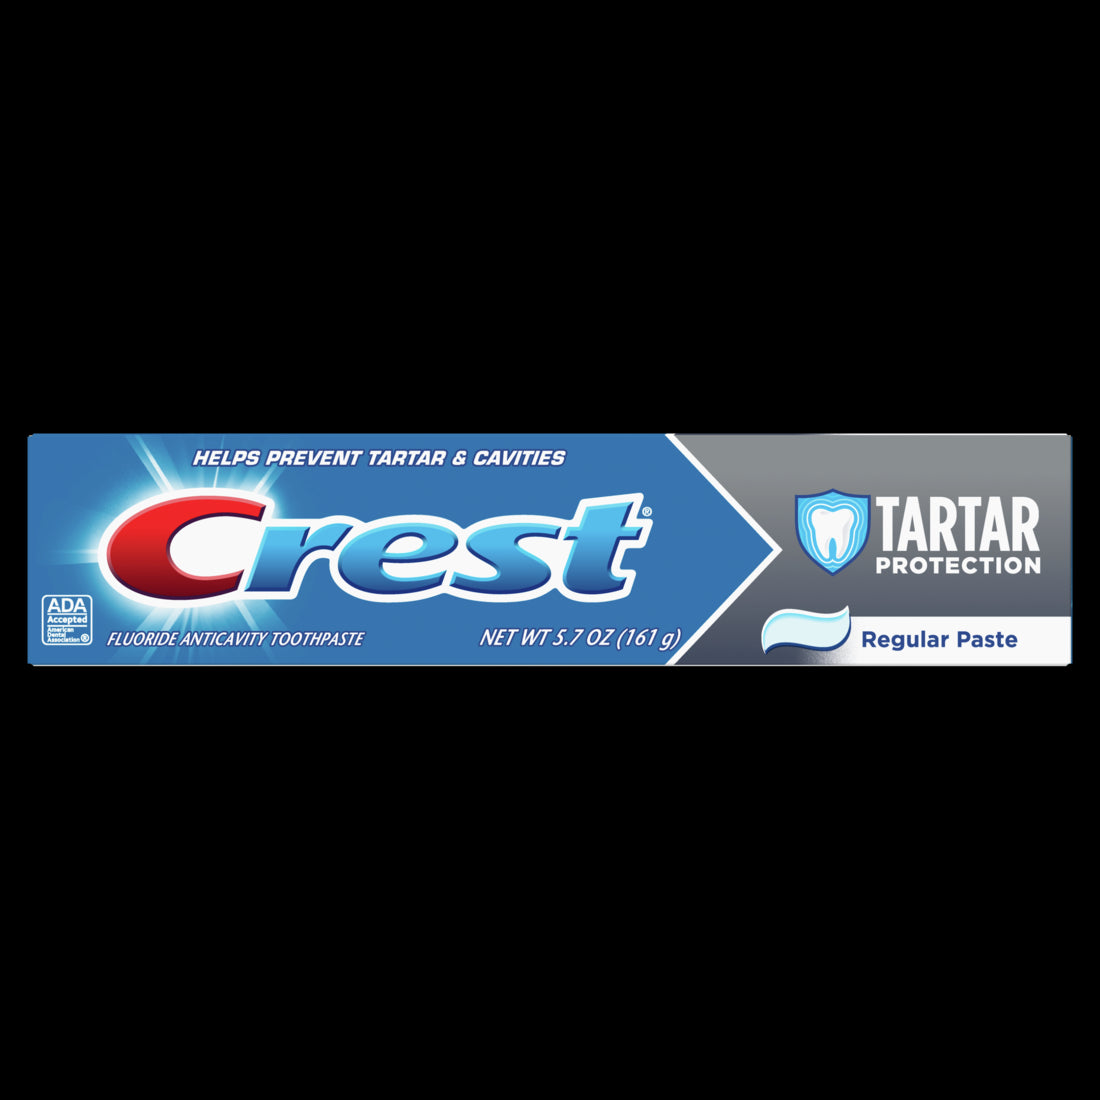 Crest Tartar Protection Toothpaste Regular Paste - 5.7oz/24pk